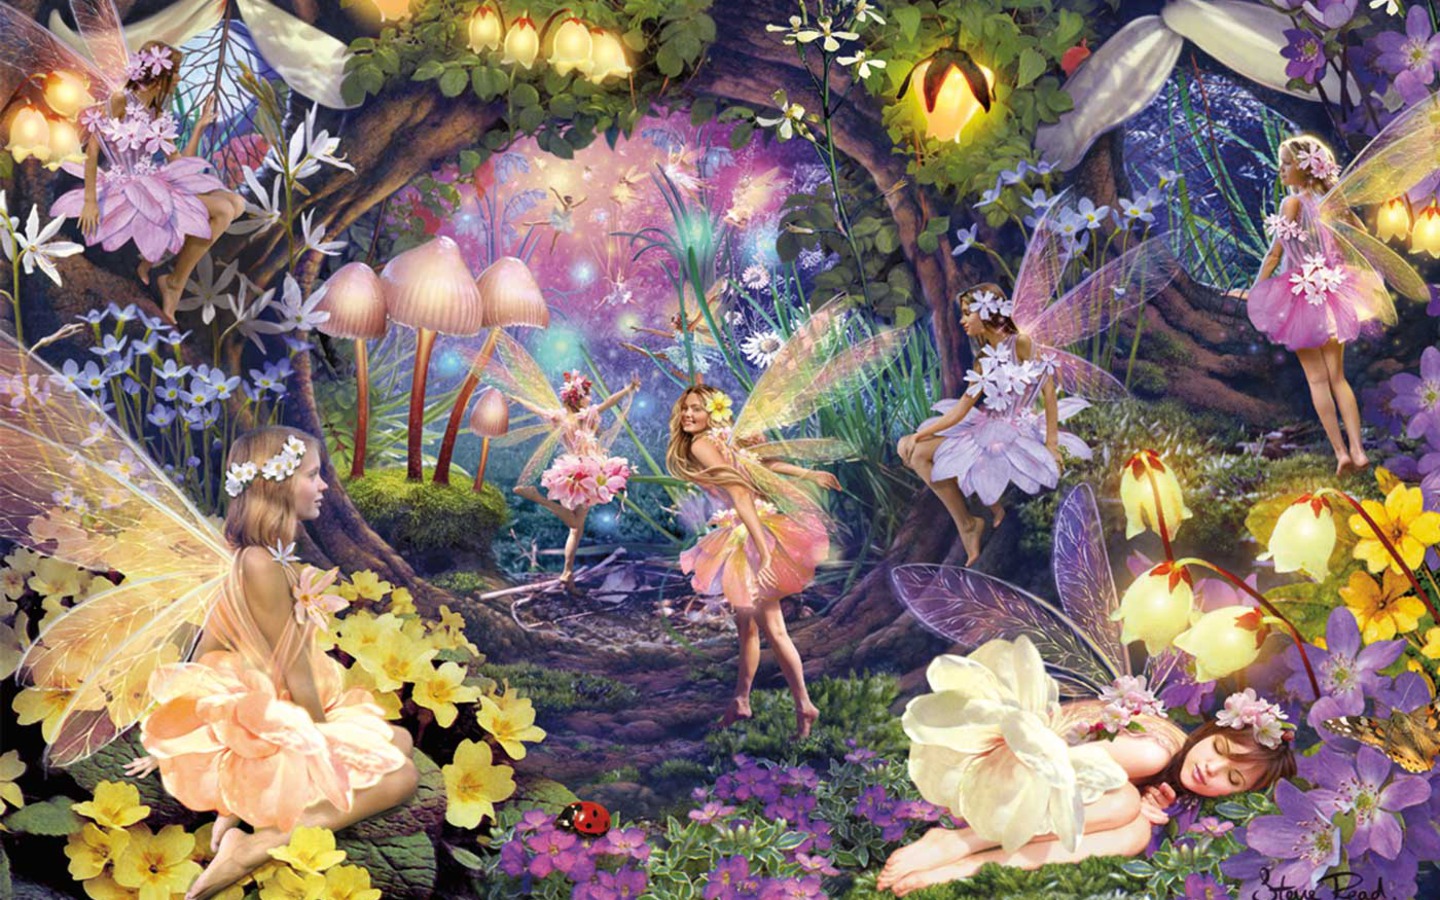 Beautiful Fantasy Angels Wallpaper Pixhome